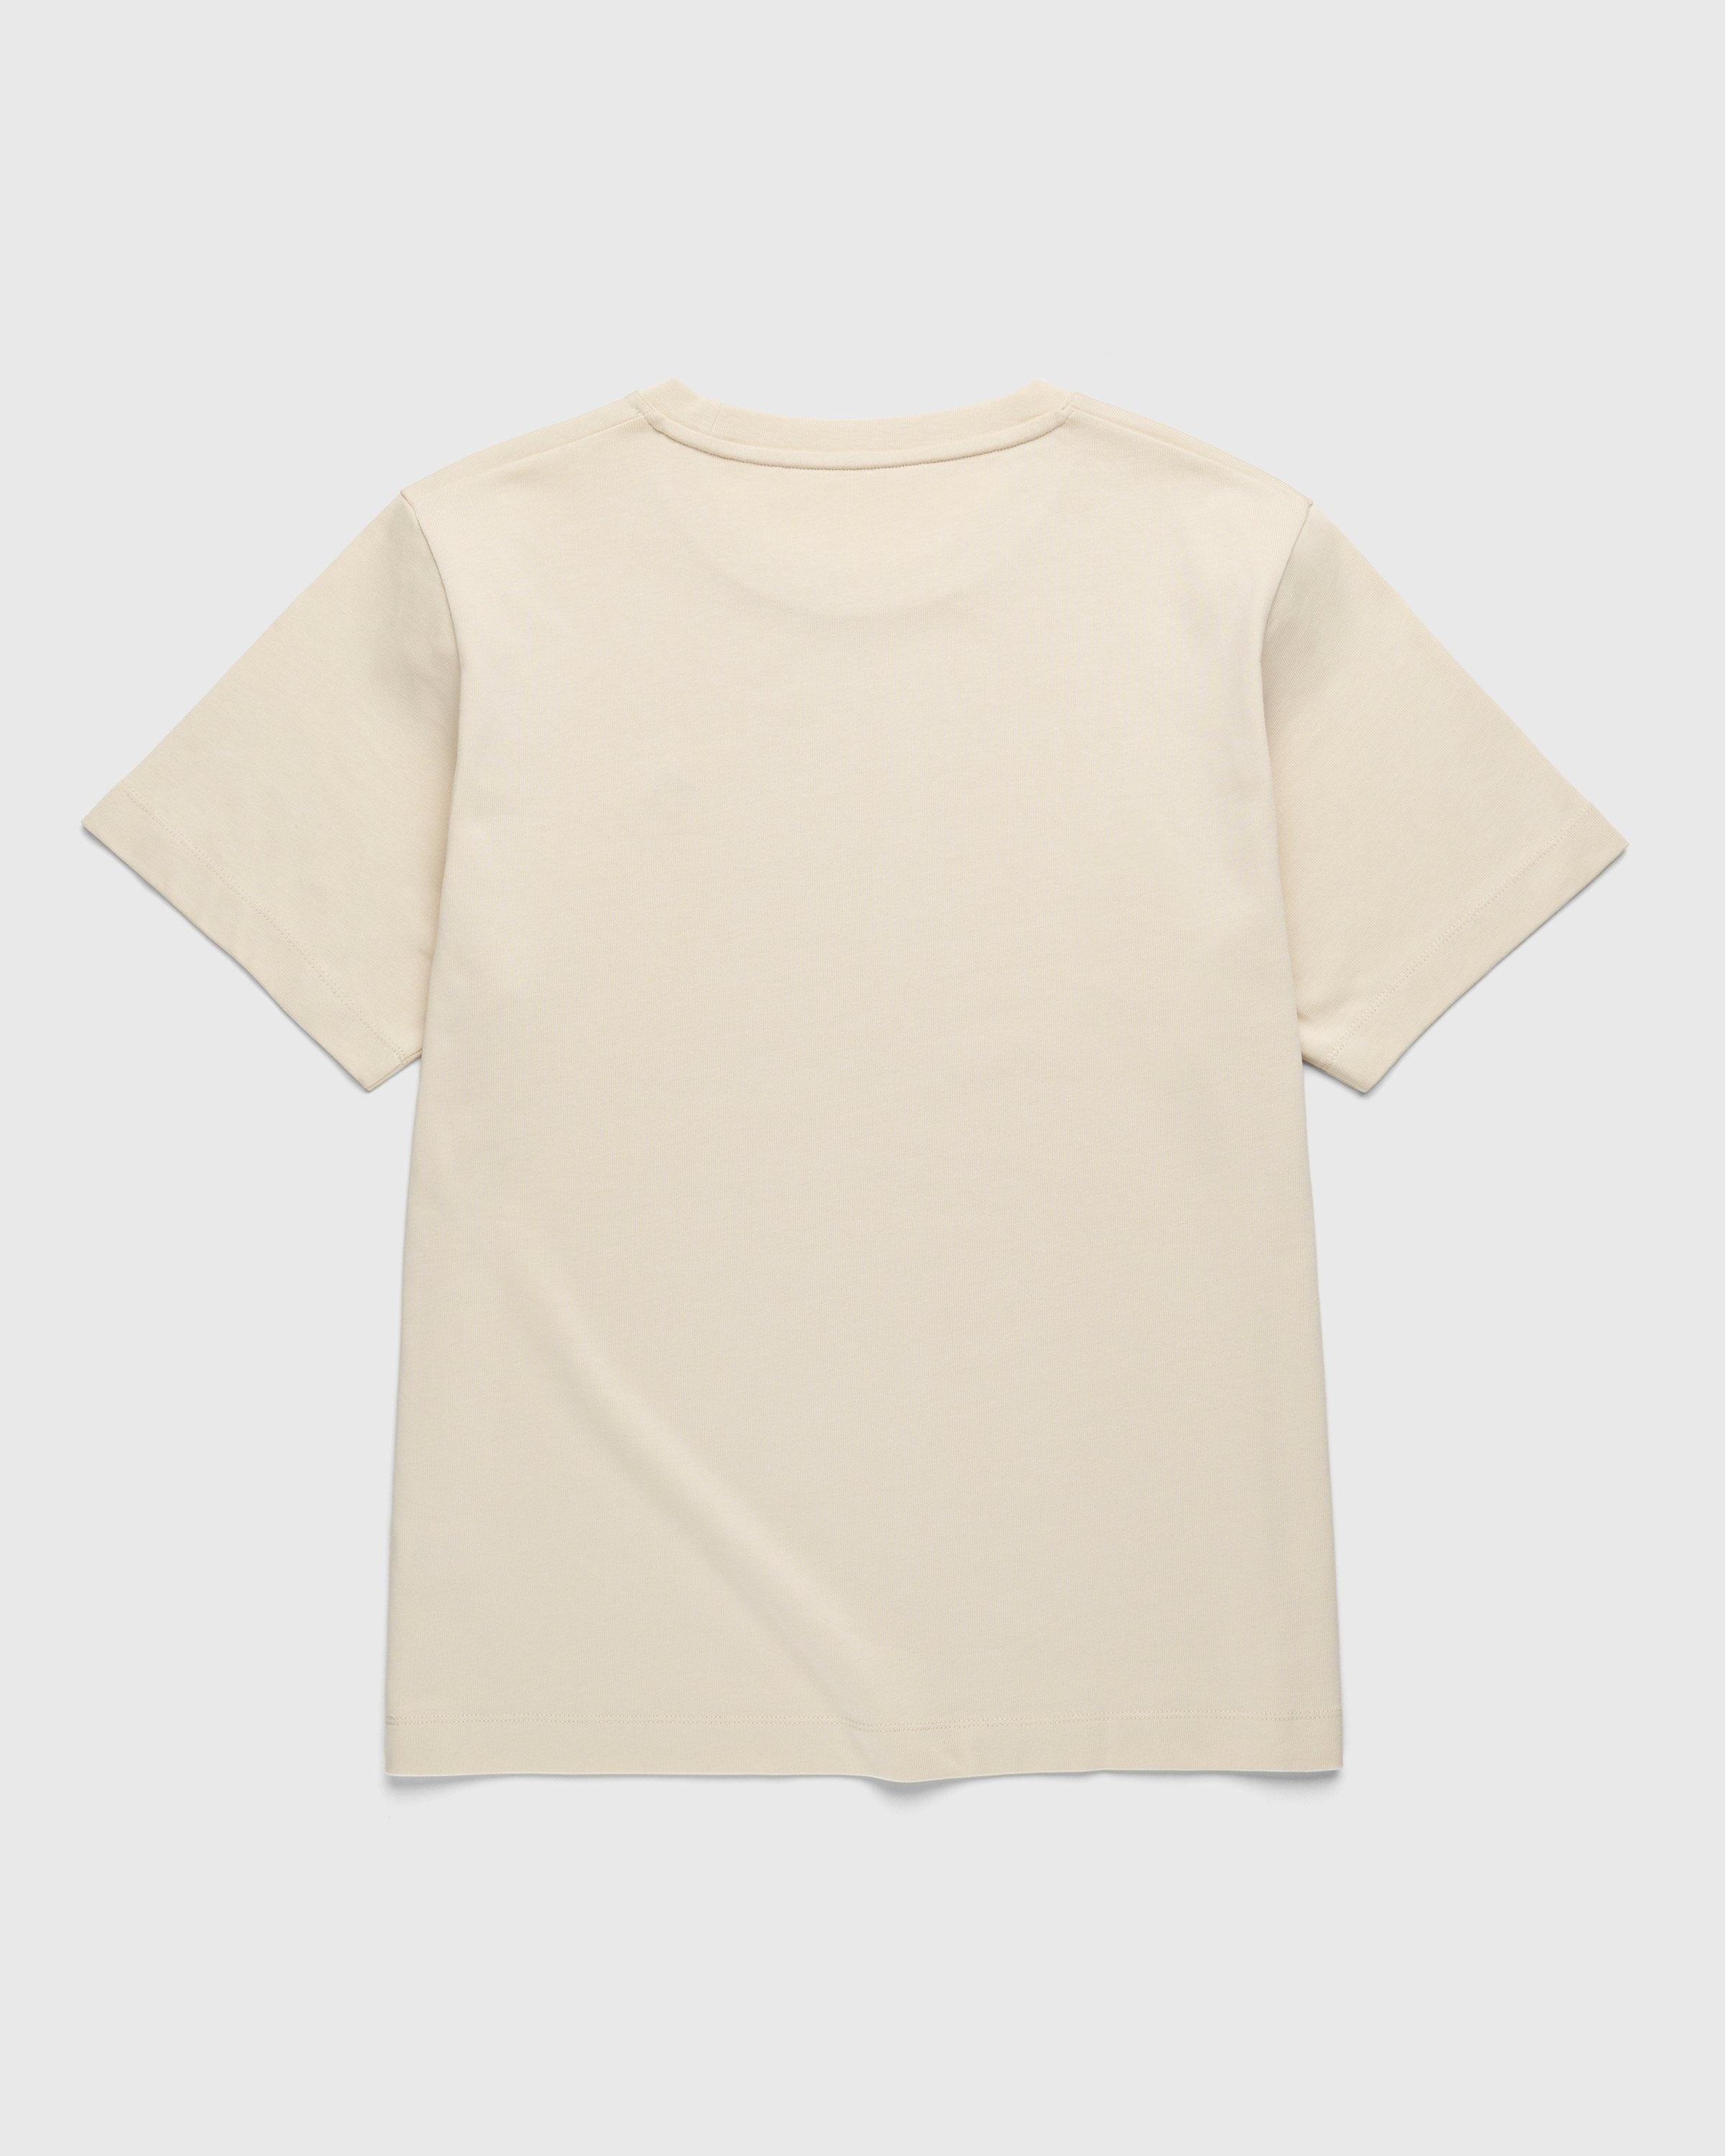 Marine Serre – Organic Cotton T-Shirt Beige - T-Shirts - Beige - Image 2